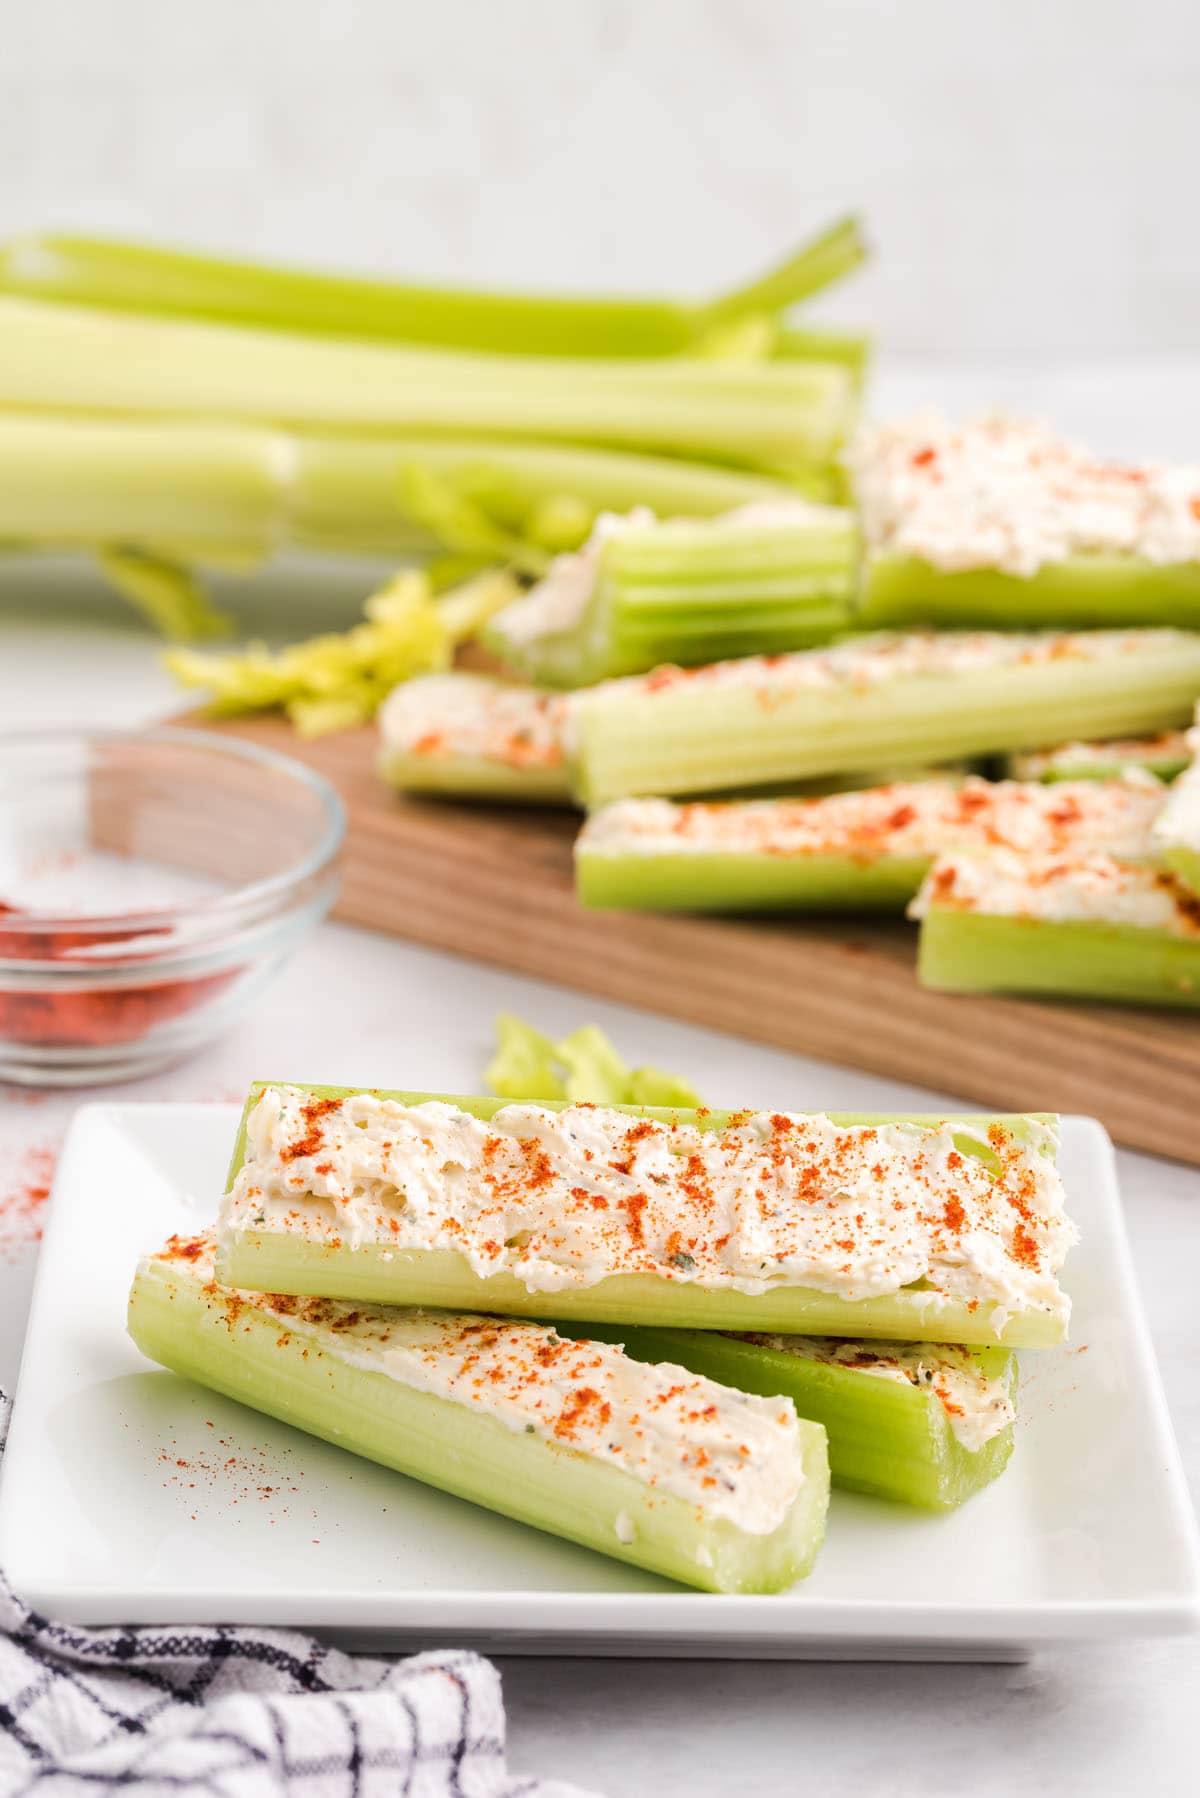 stuffed celery on the plate